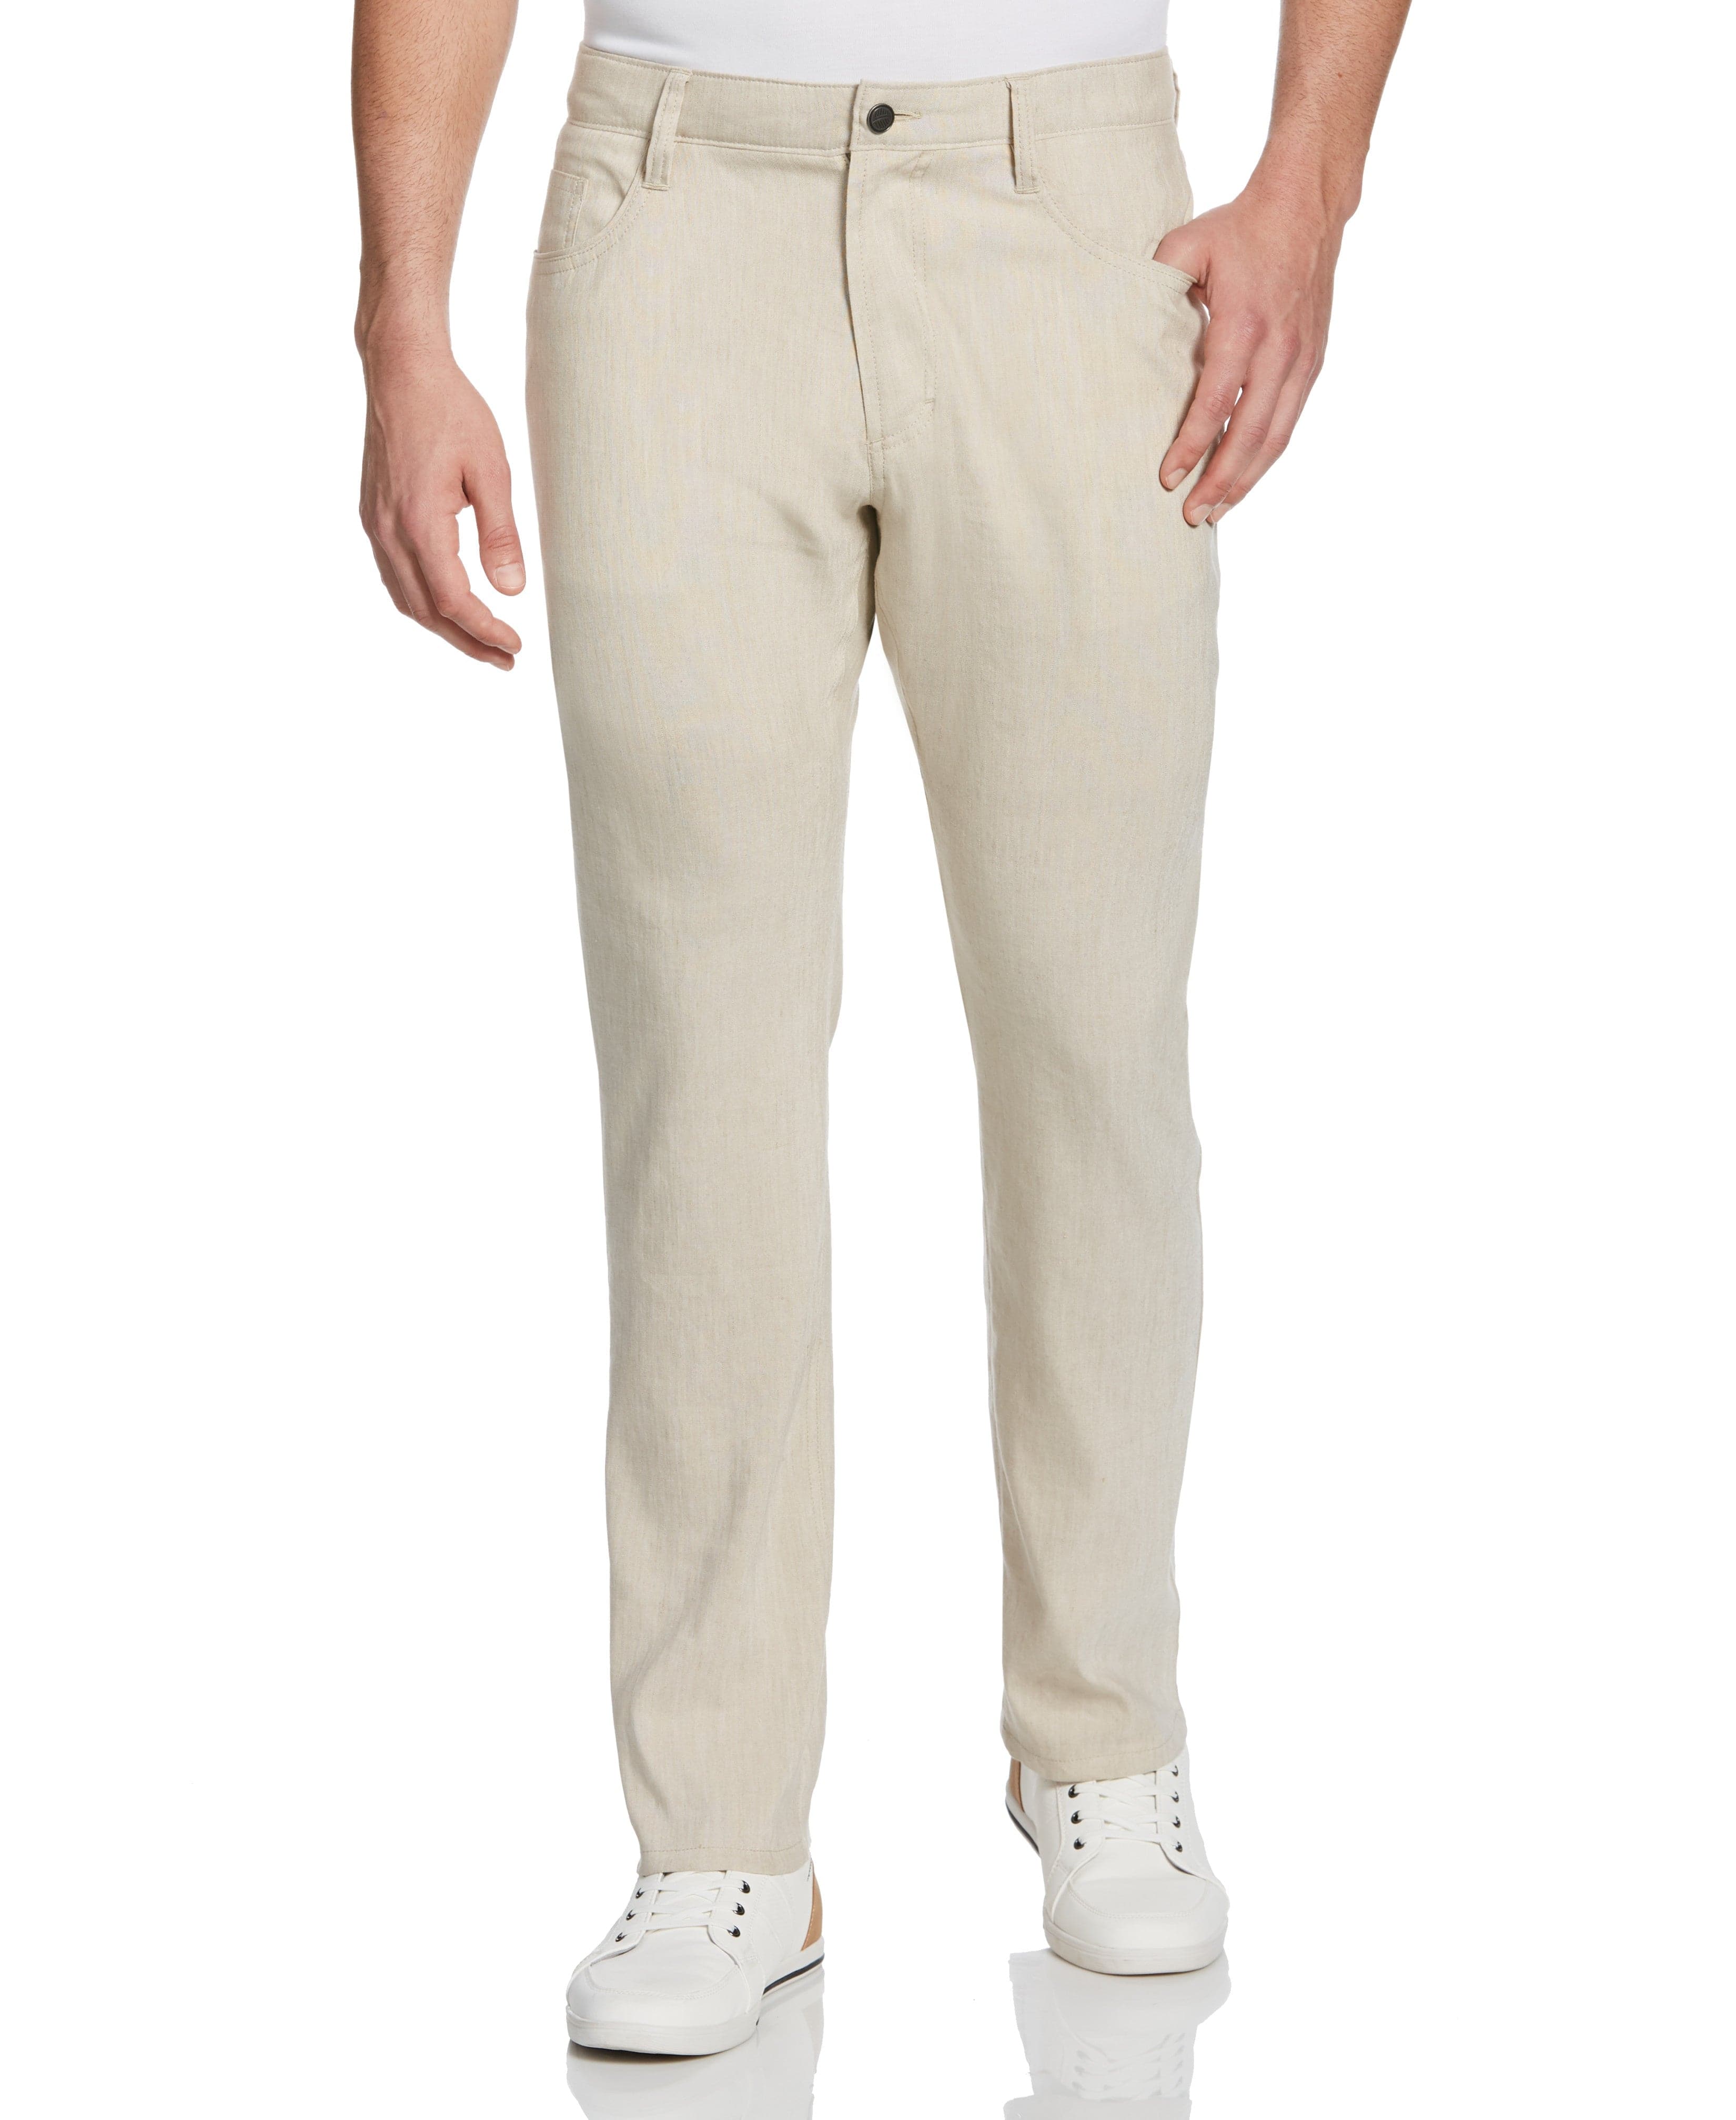 Guvpev Linen Clothing For Men Natural Linen Pants For Men Contemporary  Comfortable Quality Soft Linen Pocket Color Trousers - Light blue XXXXL 